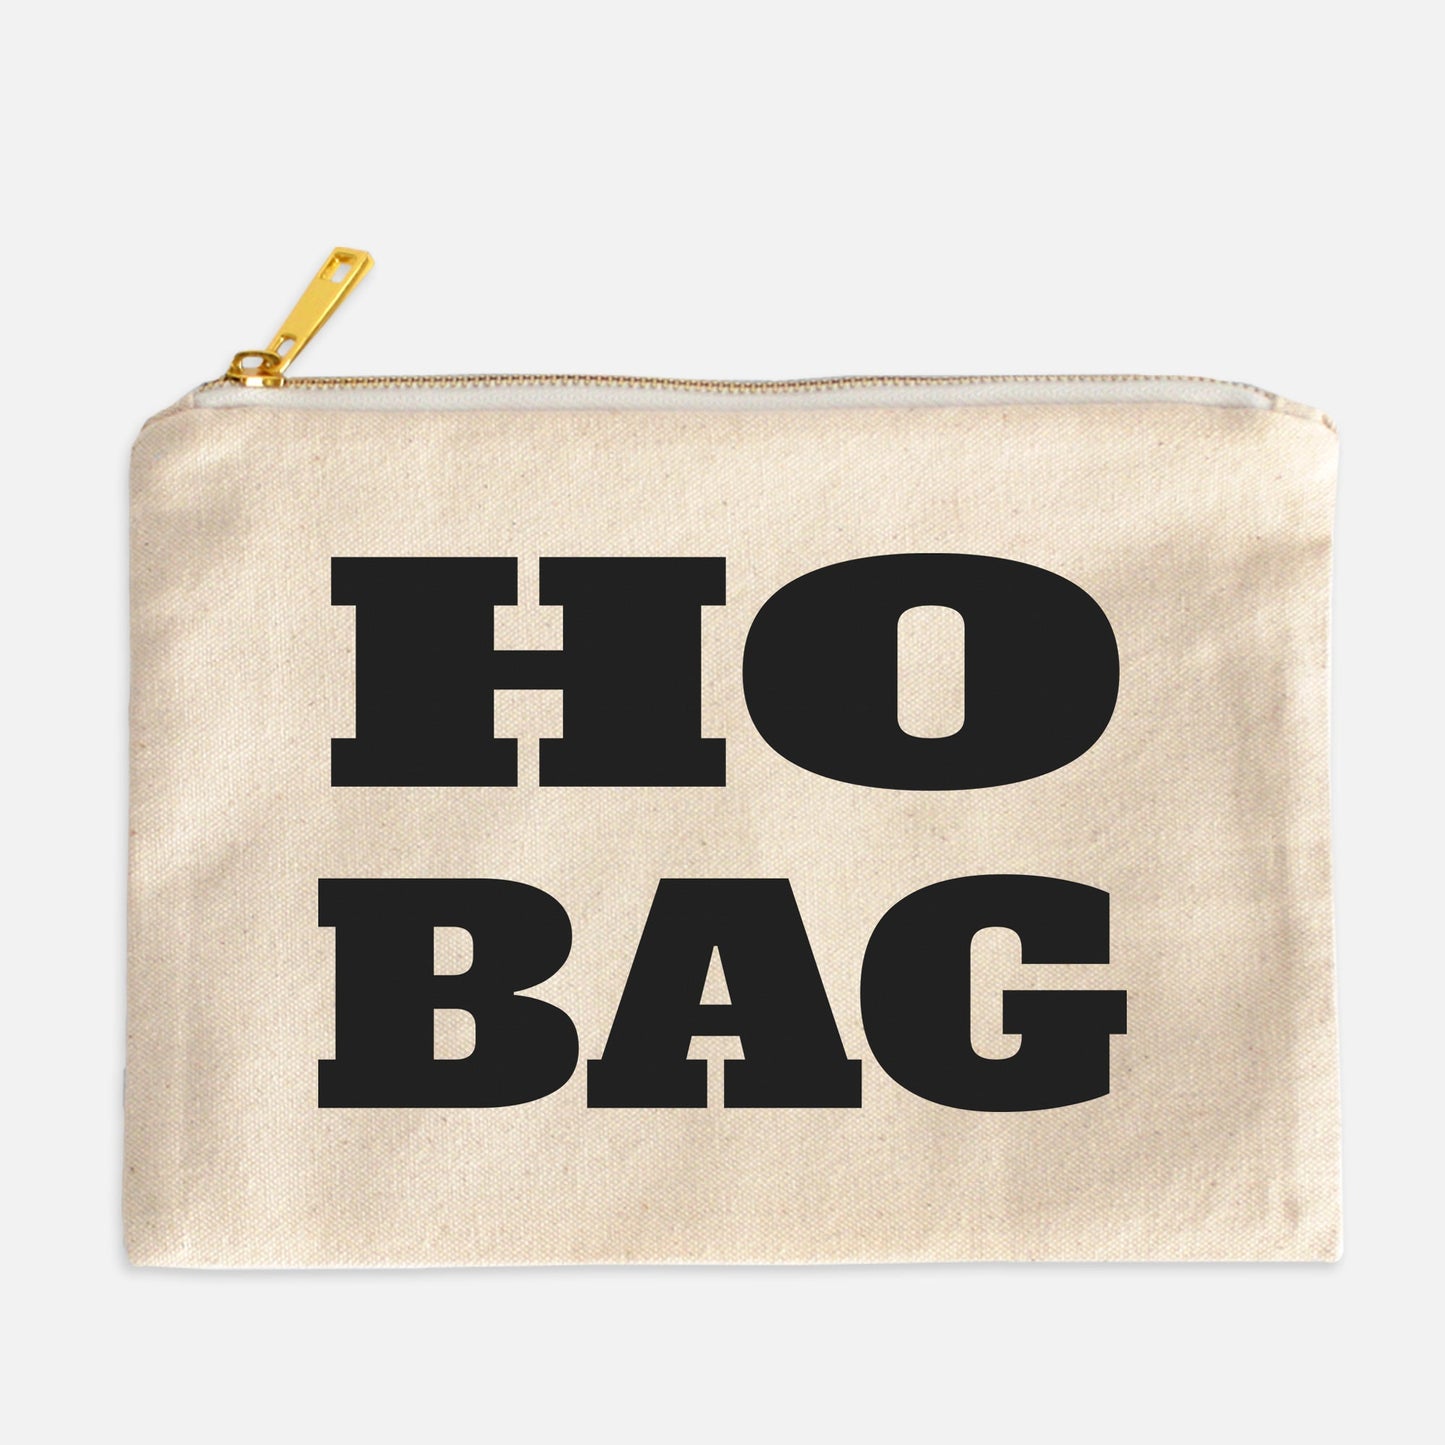 Funny Cosmetic Bag Gift Ho Bag Cosmetic Bag-Cosmetic Bags-Crimson and Clover Studio